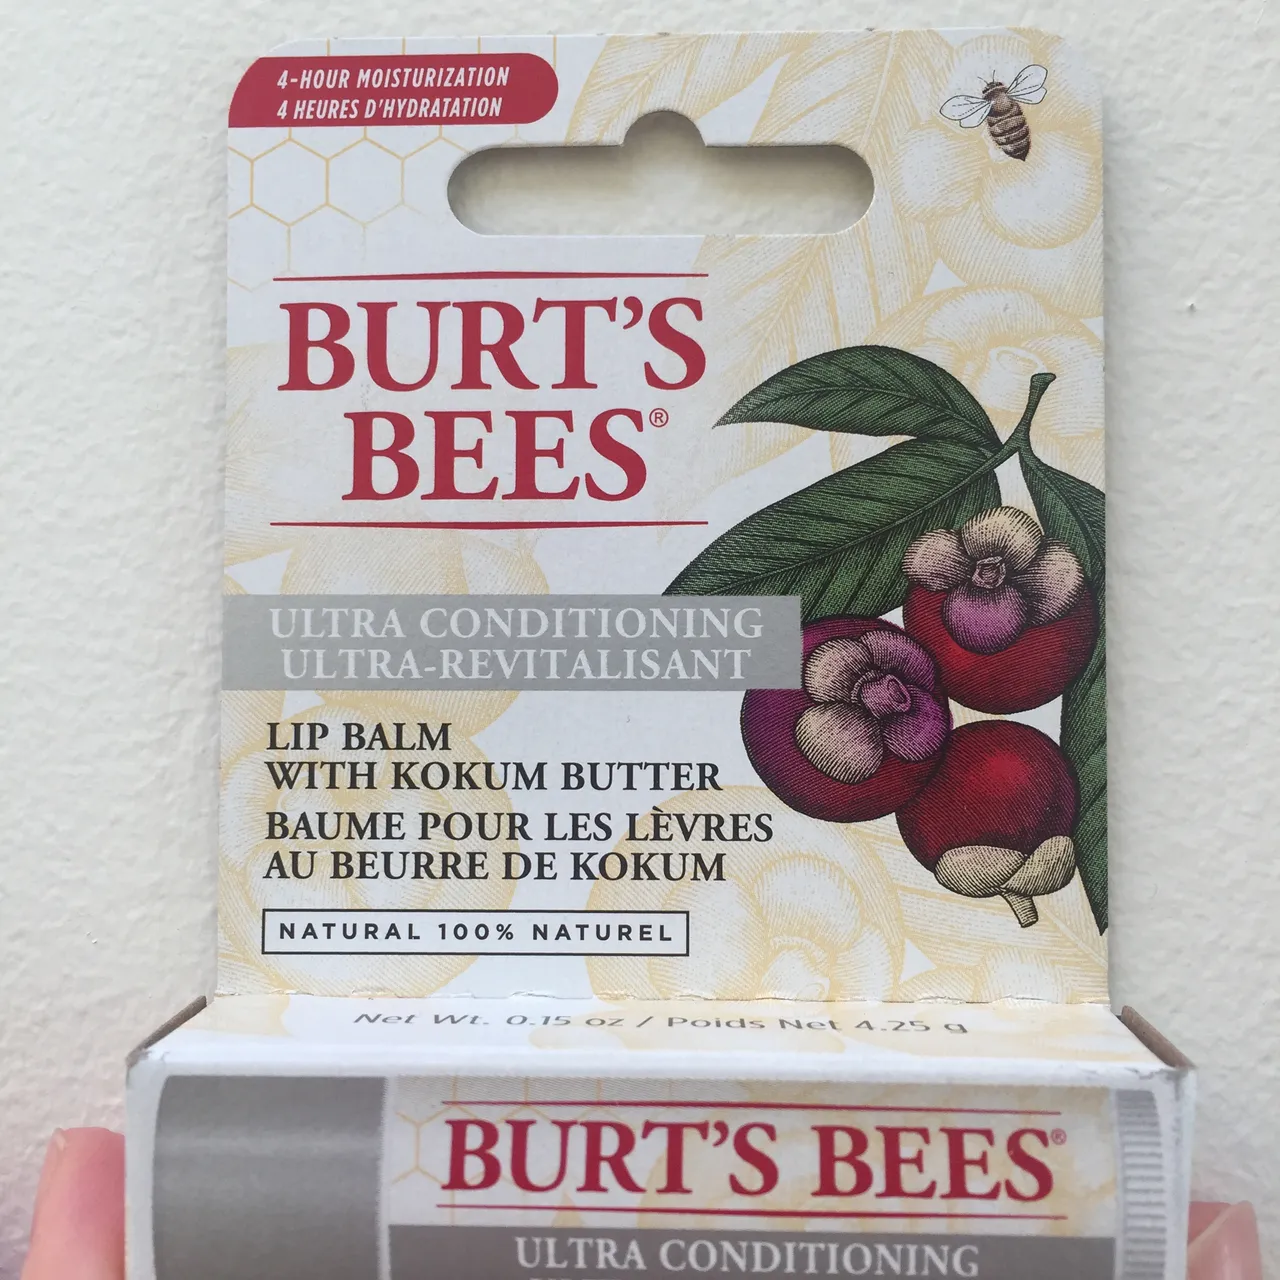 NEW Burt's Bees ultra conditioning lip balm photo 1